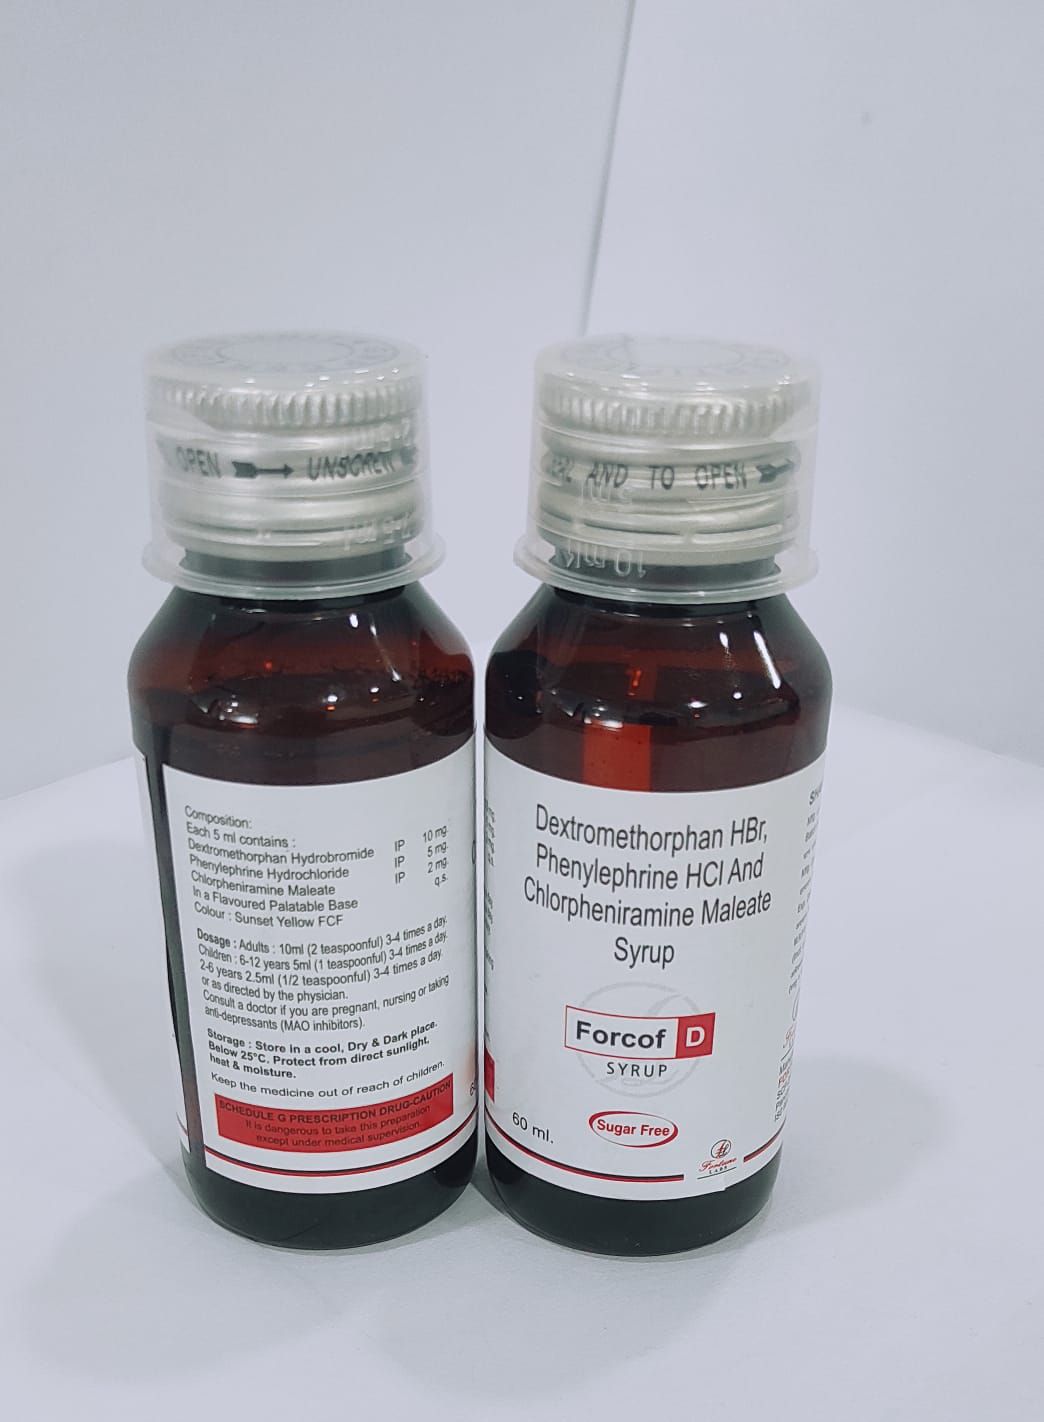 dextromehorphen10mg+phenylephrine 5mg
+cpm 2mg  sugar free